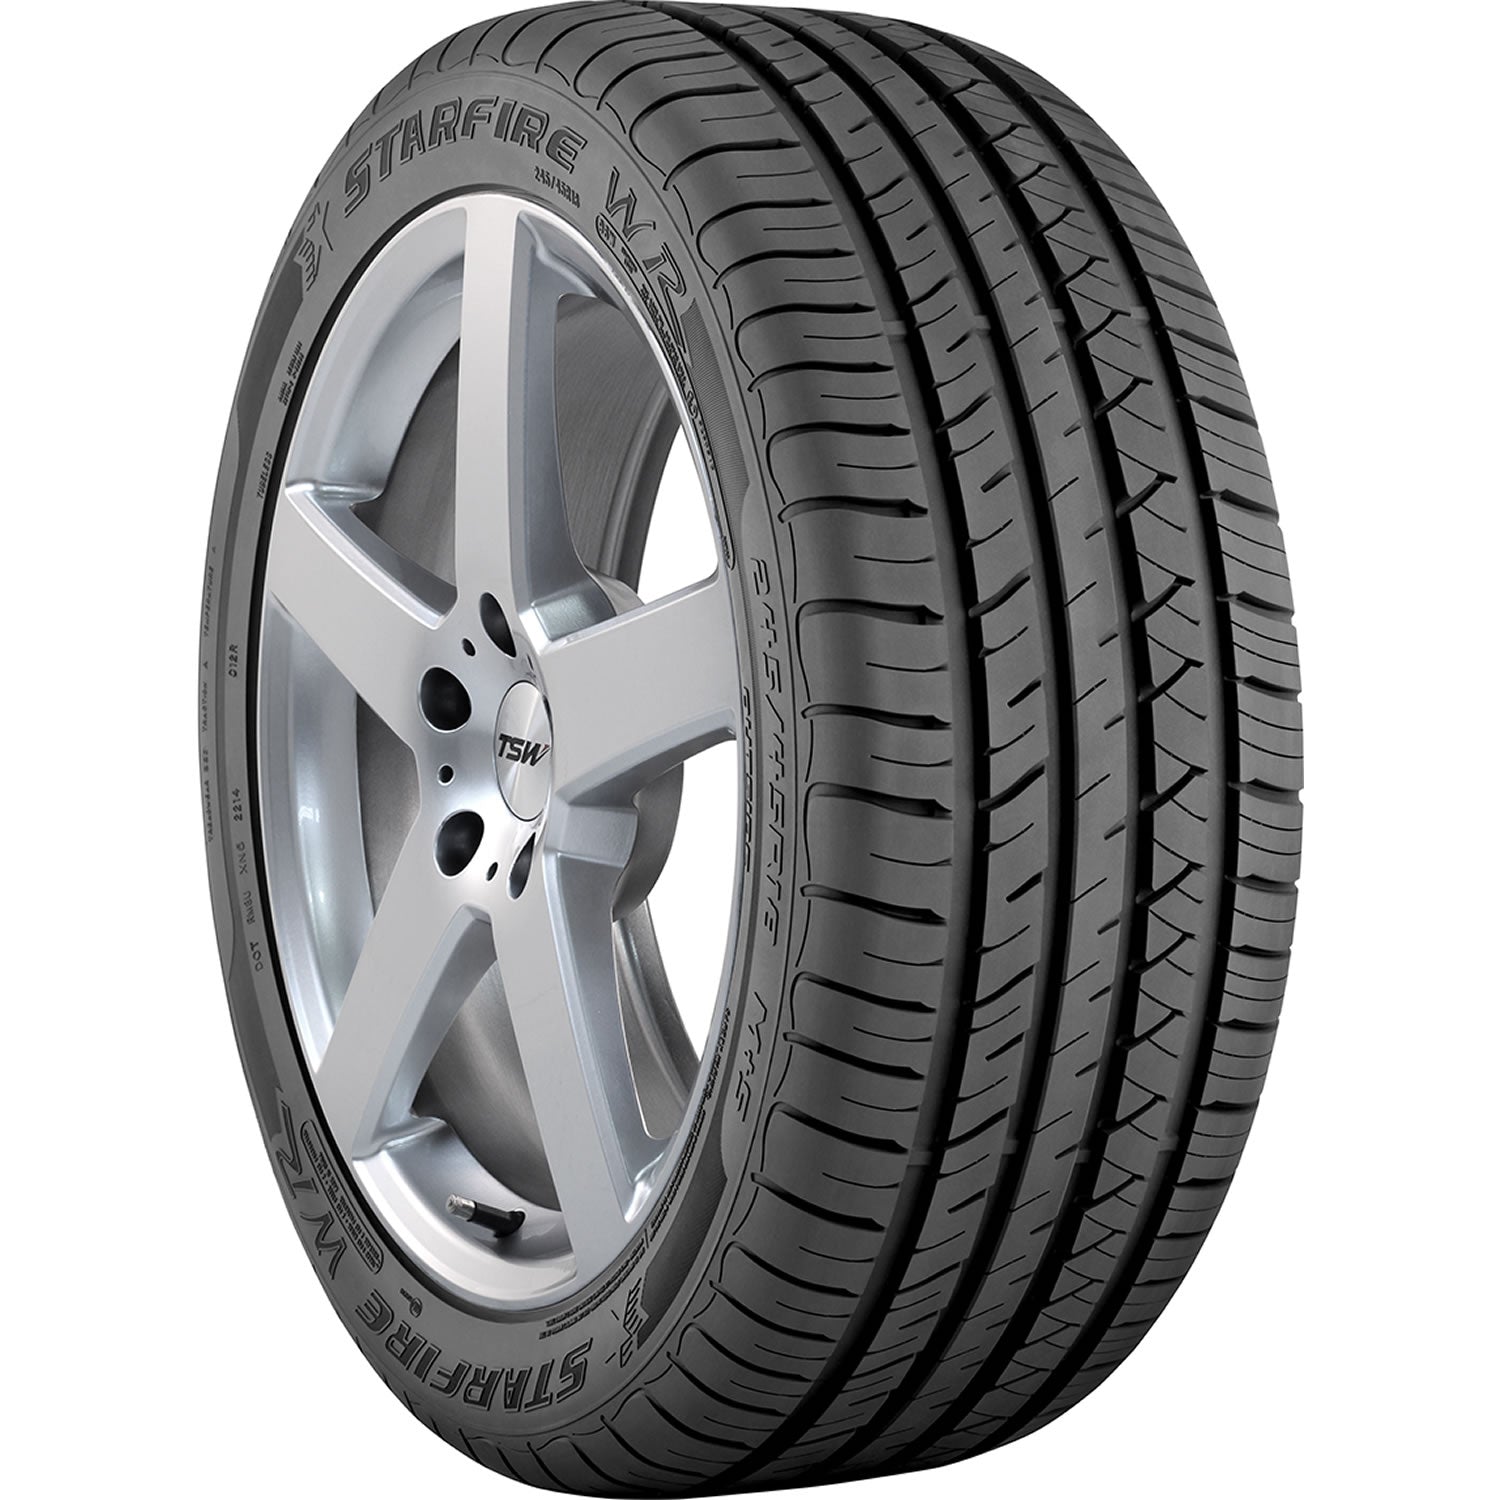 STARFIRE WR 245/50R16 (25.7X10R 16) Tires